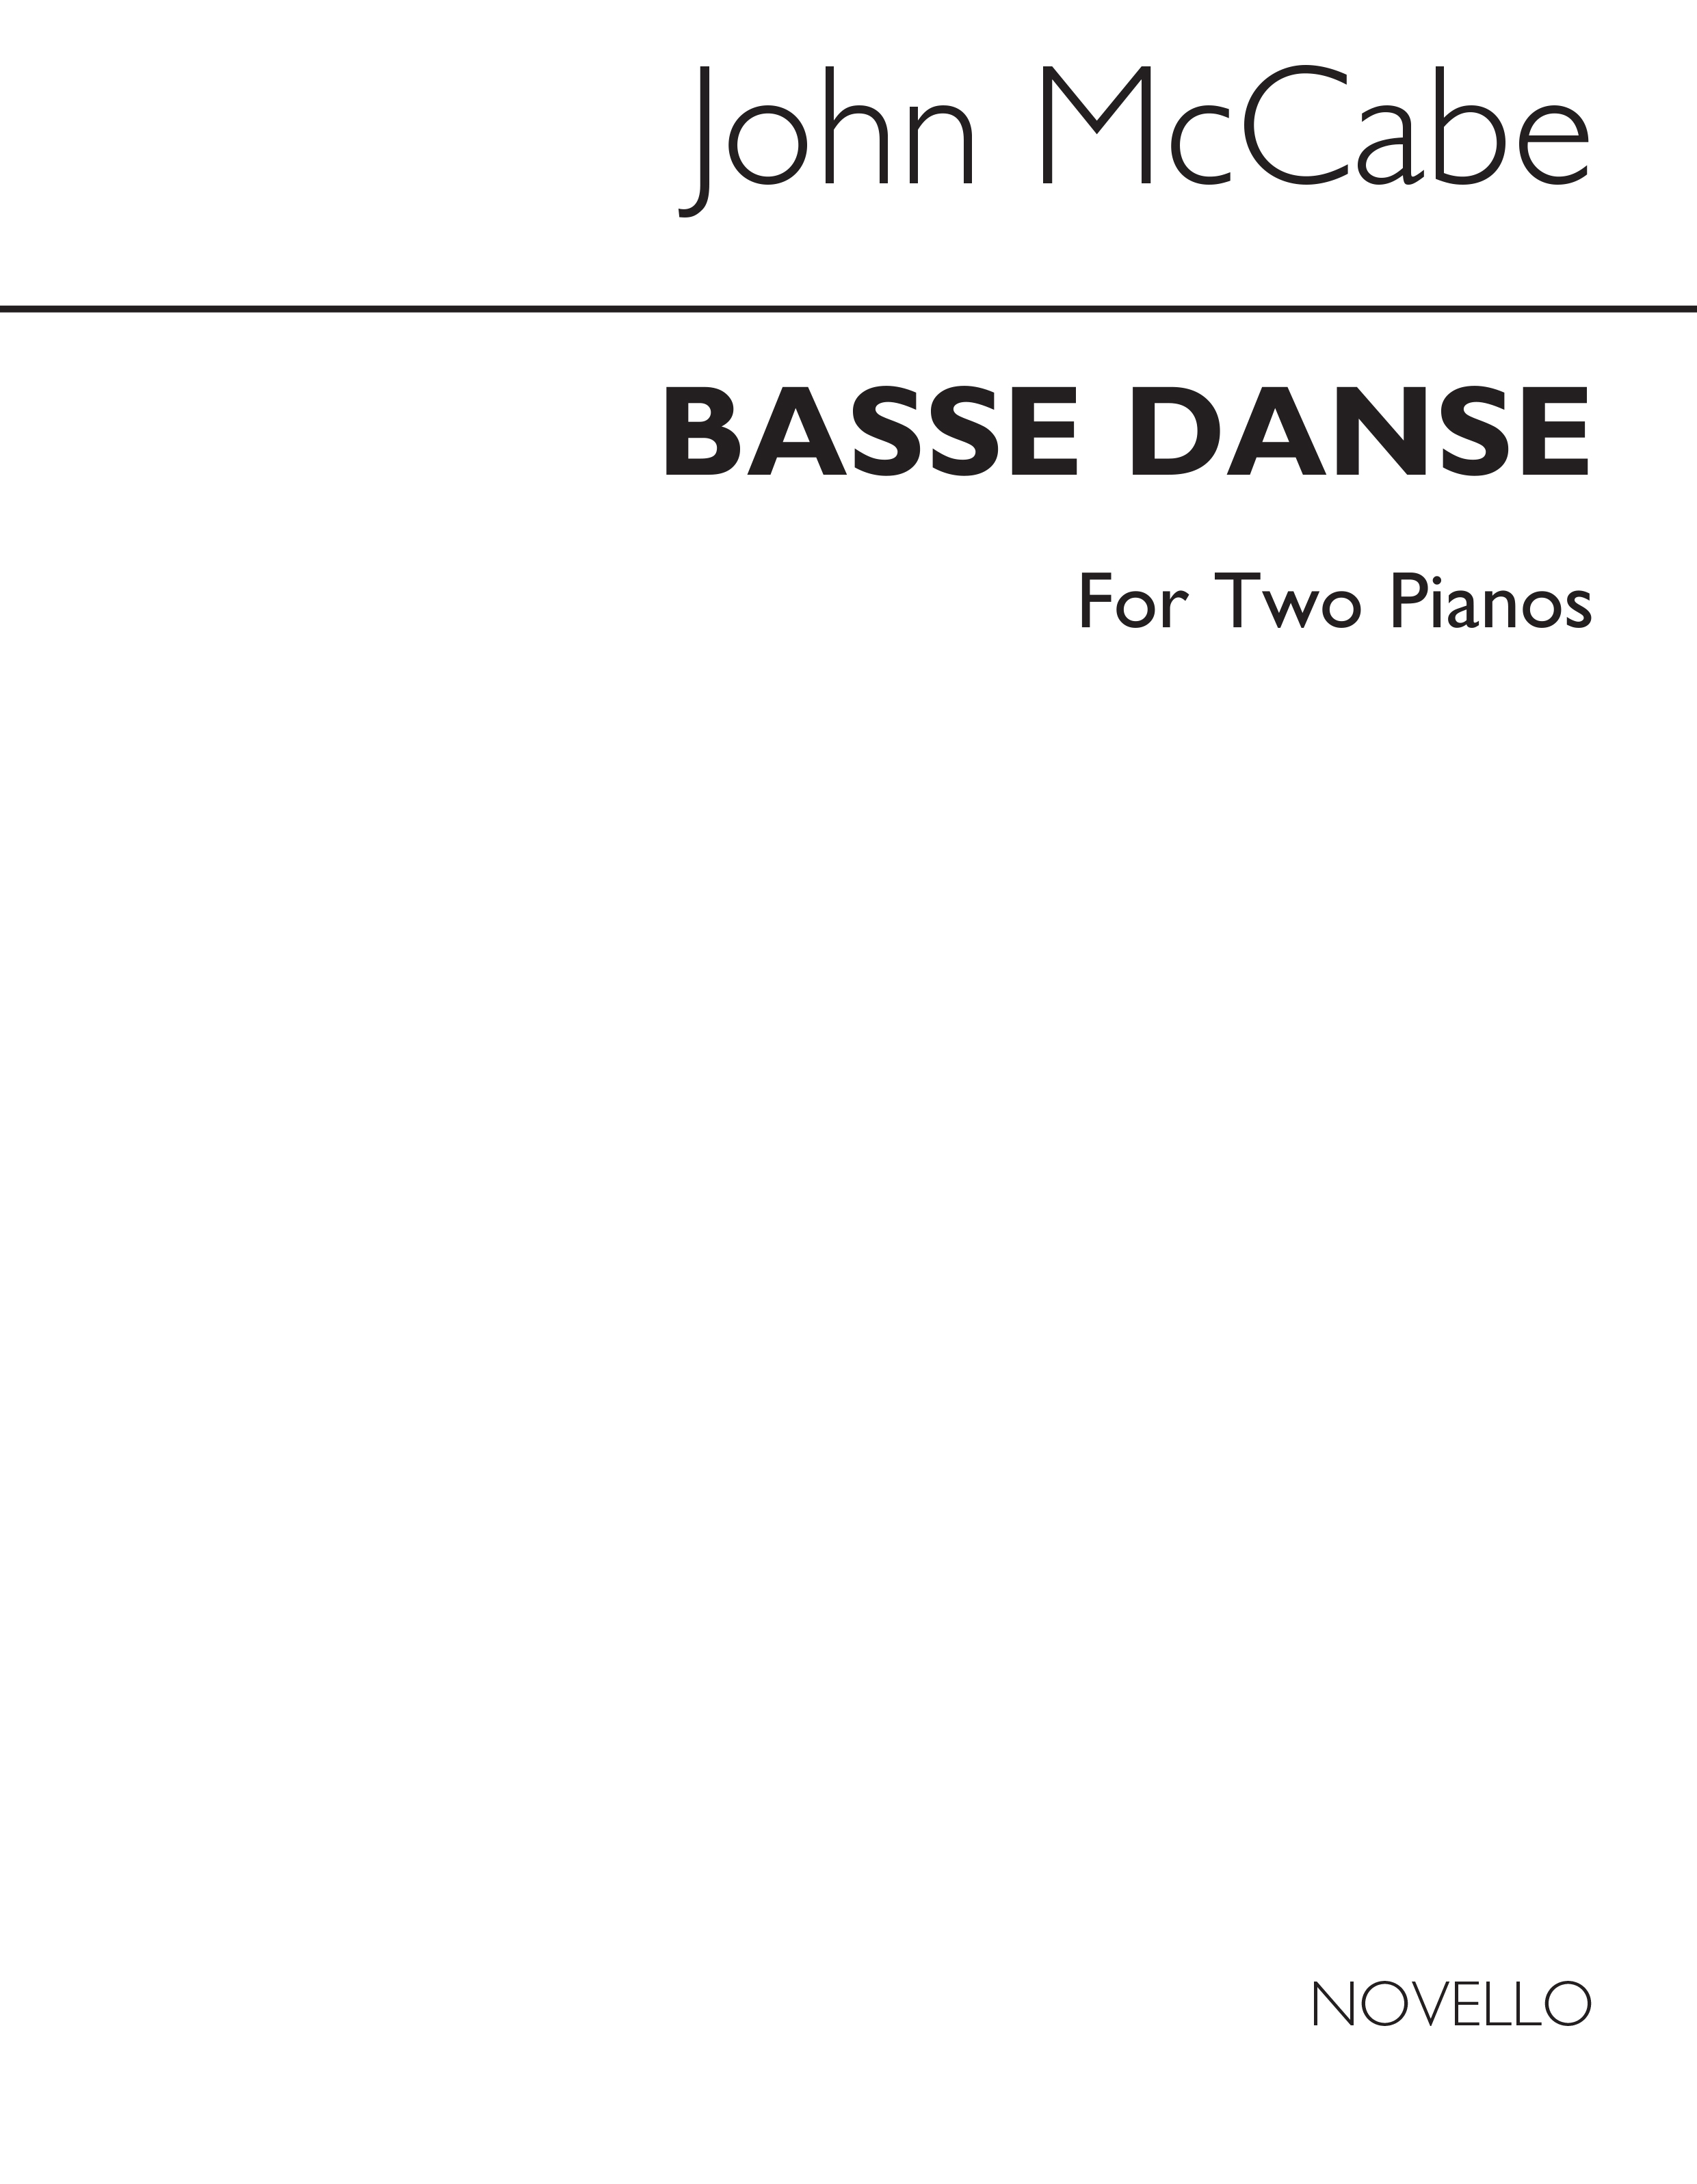 John McCabe: Basse Danse For Two Pianos